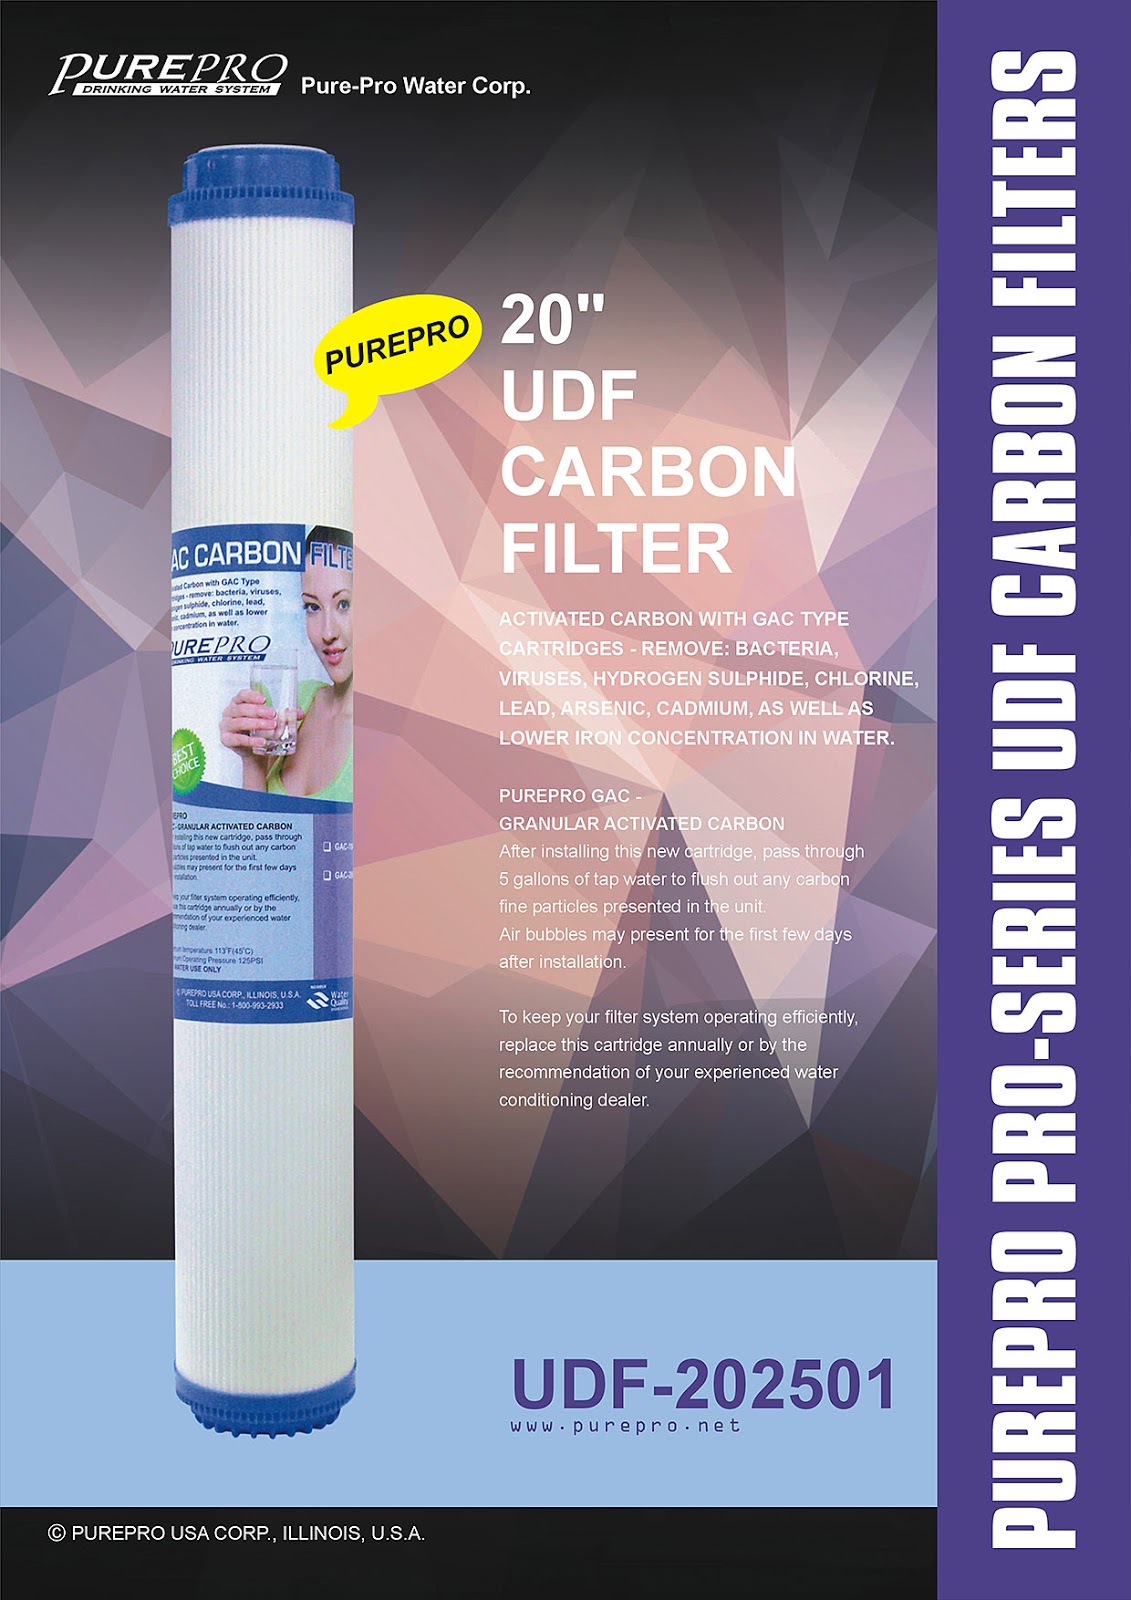 PurePro® USA 20" UDF Carbon Filter - PurePro UDF-202501